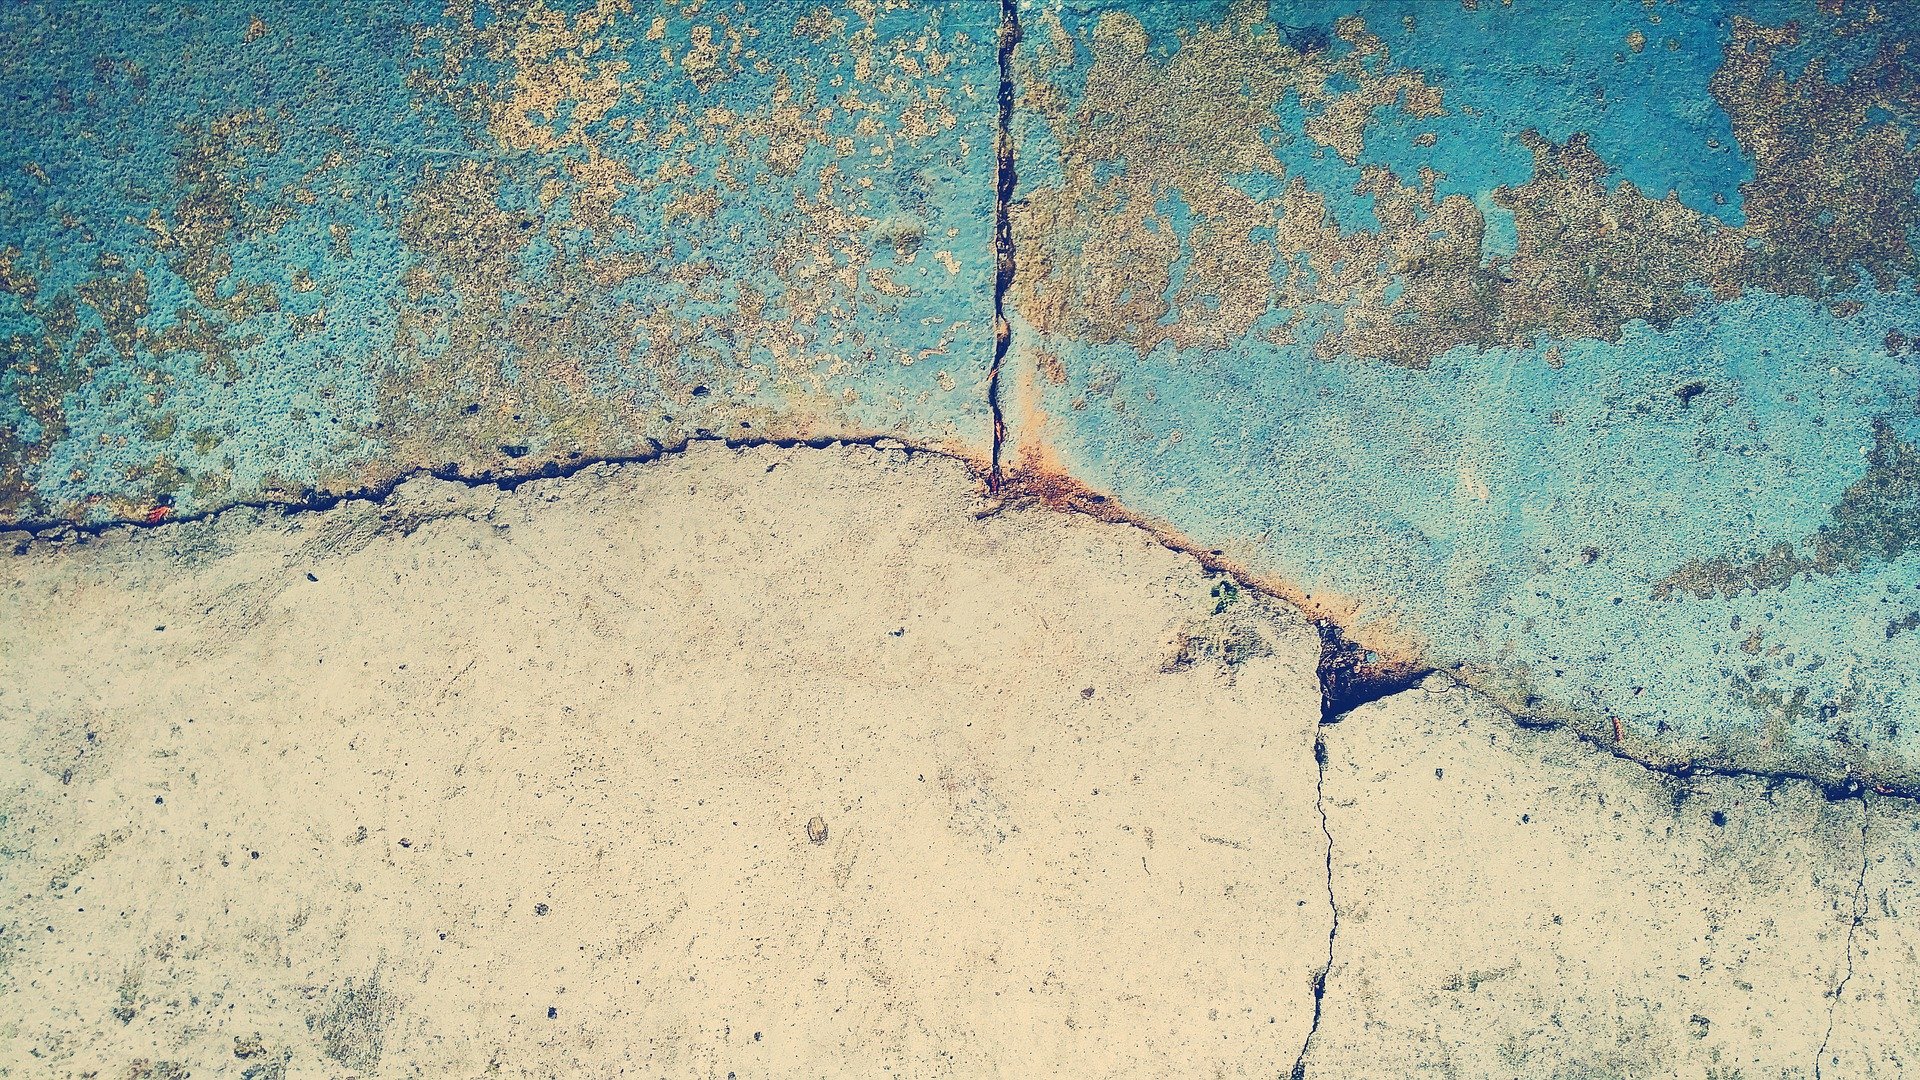 a cracked concrete need repair in & near Prairieville, LA